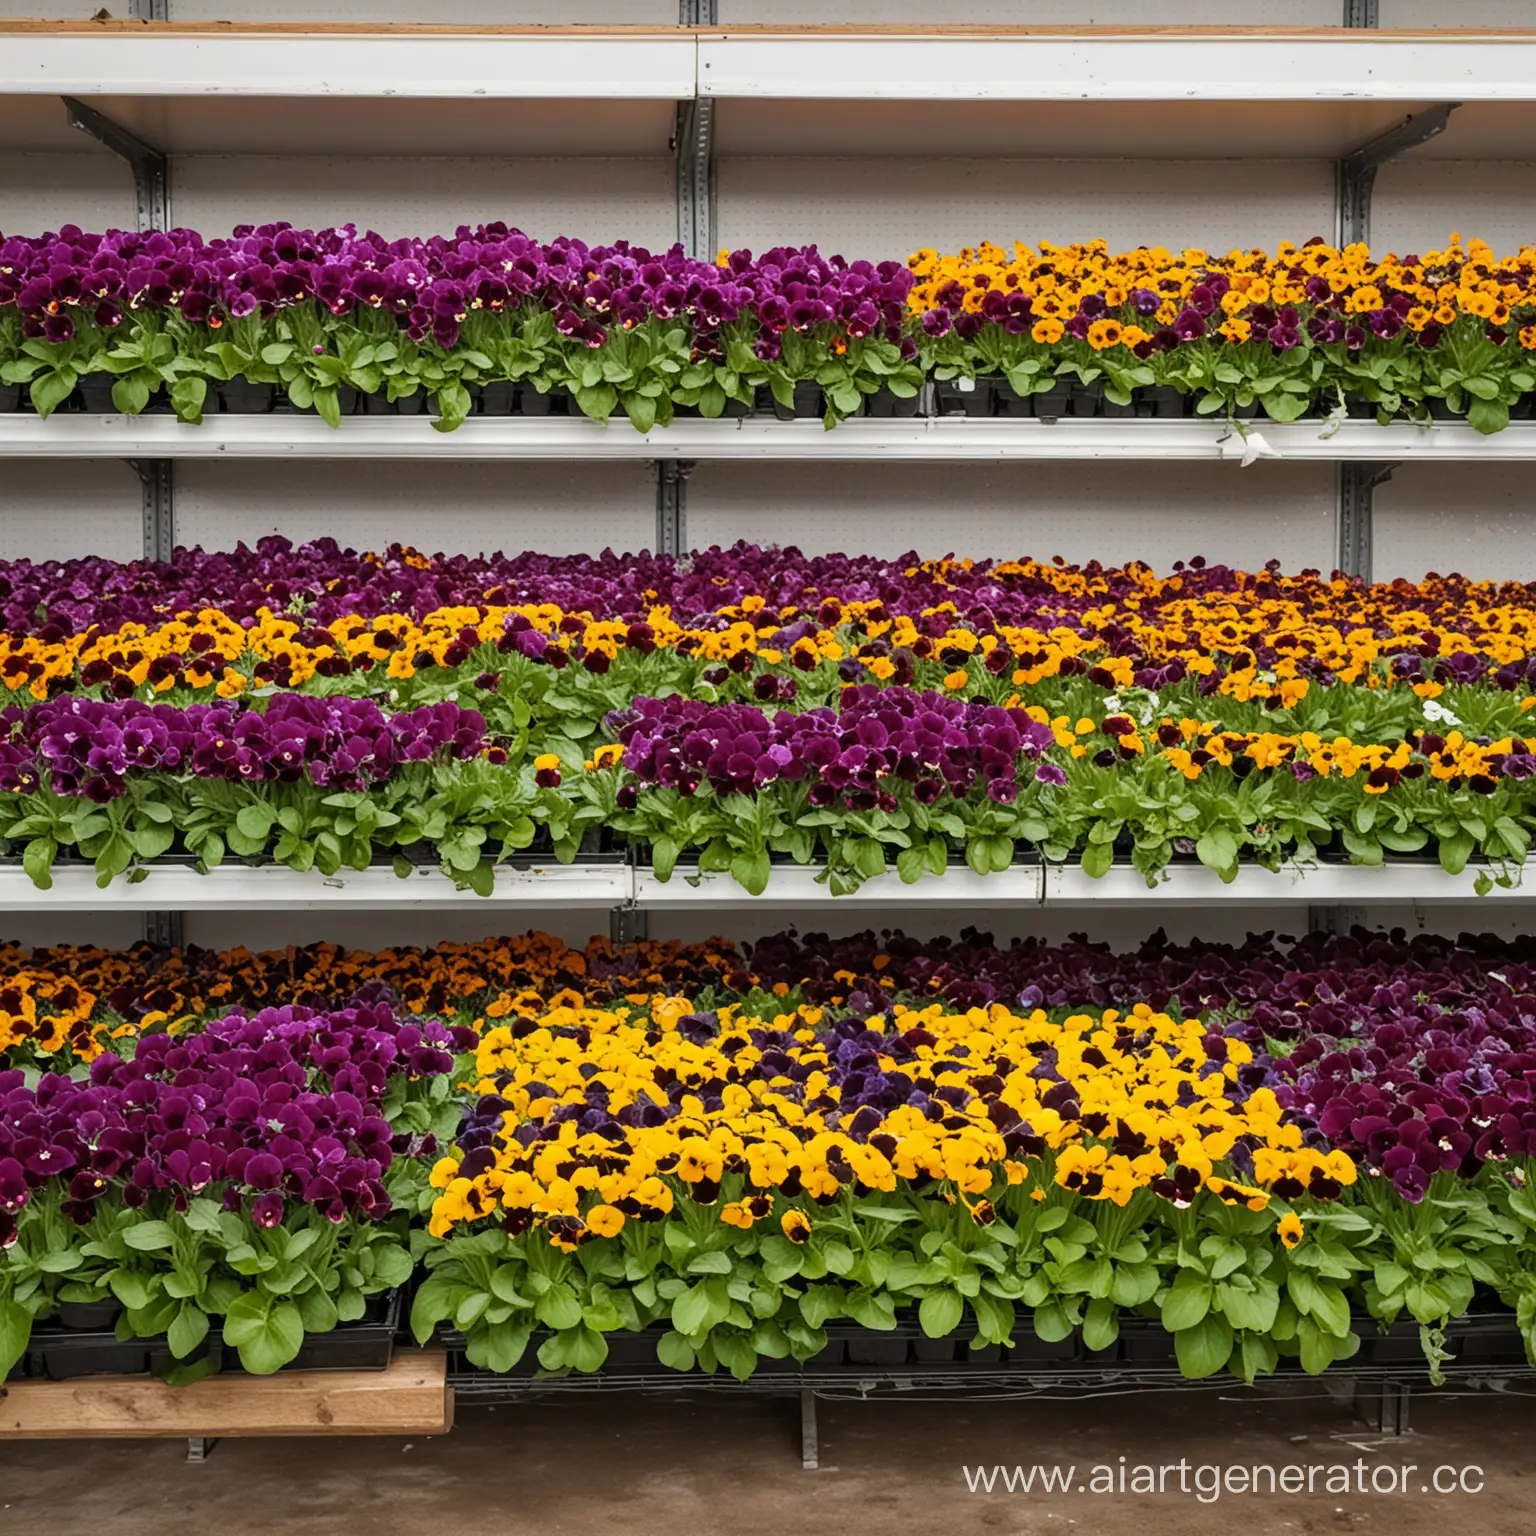 Colorful-Viola-and-Pansy-Edible-Flowers-on-Microfarm-Shelves